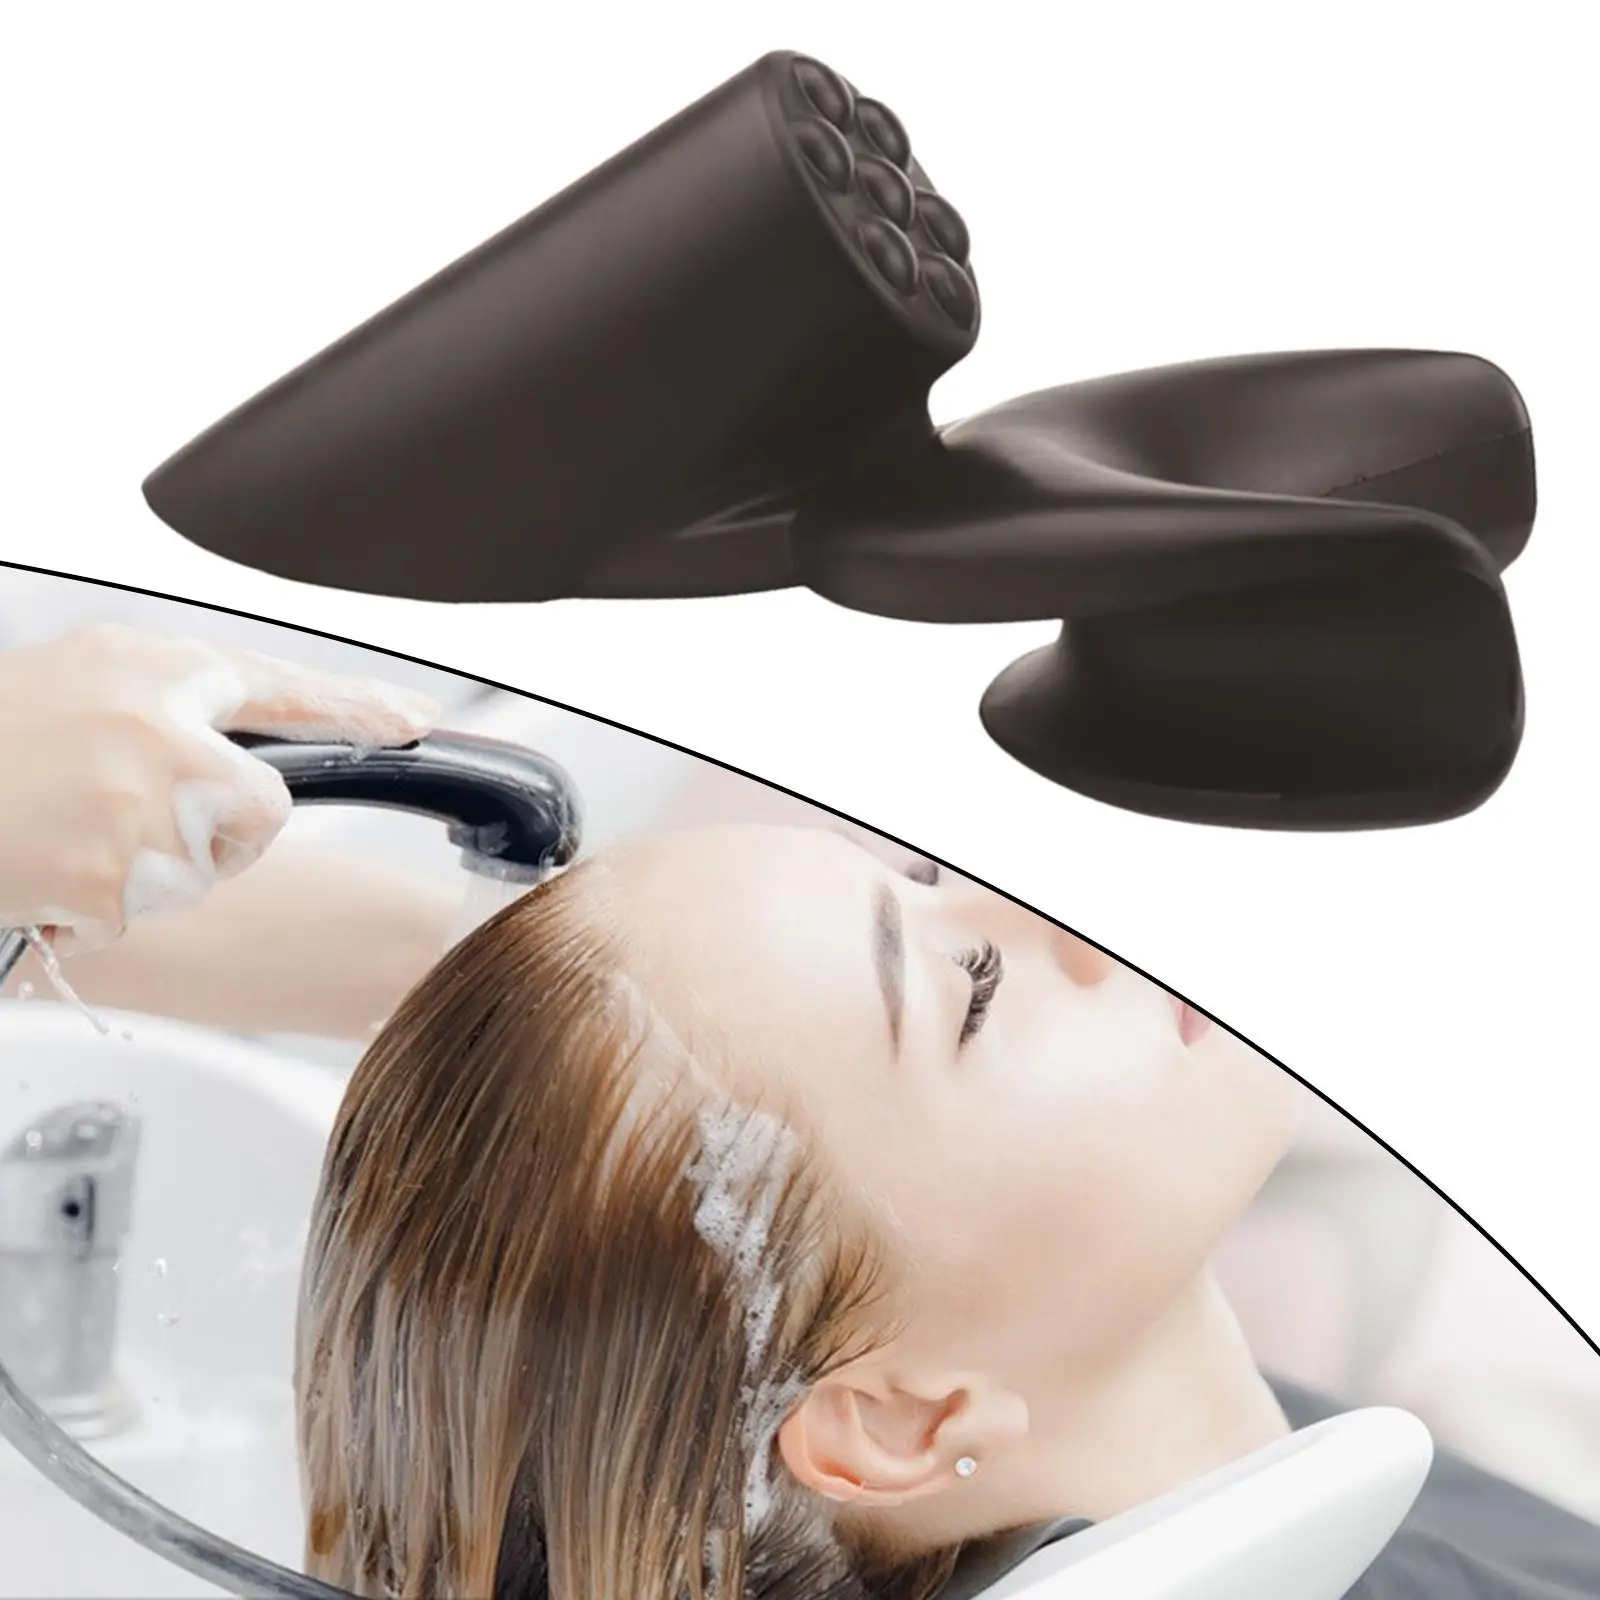 Durable Salon Neck  Non Slip Hair Salon Washing Sink Basin Support Tool Shampoo Neck Rest  for Salon Accessories